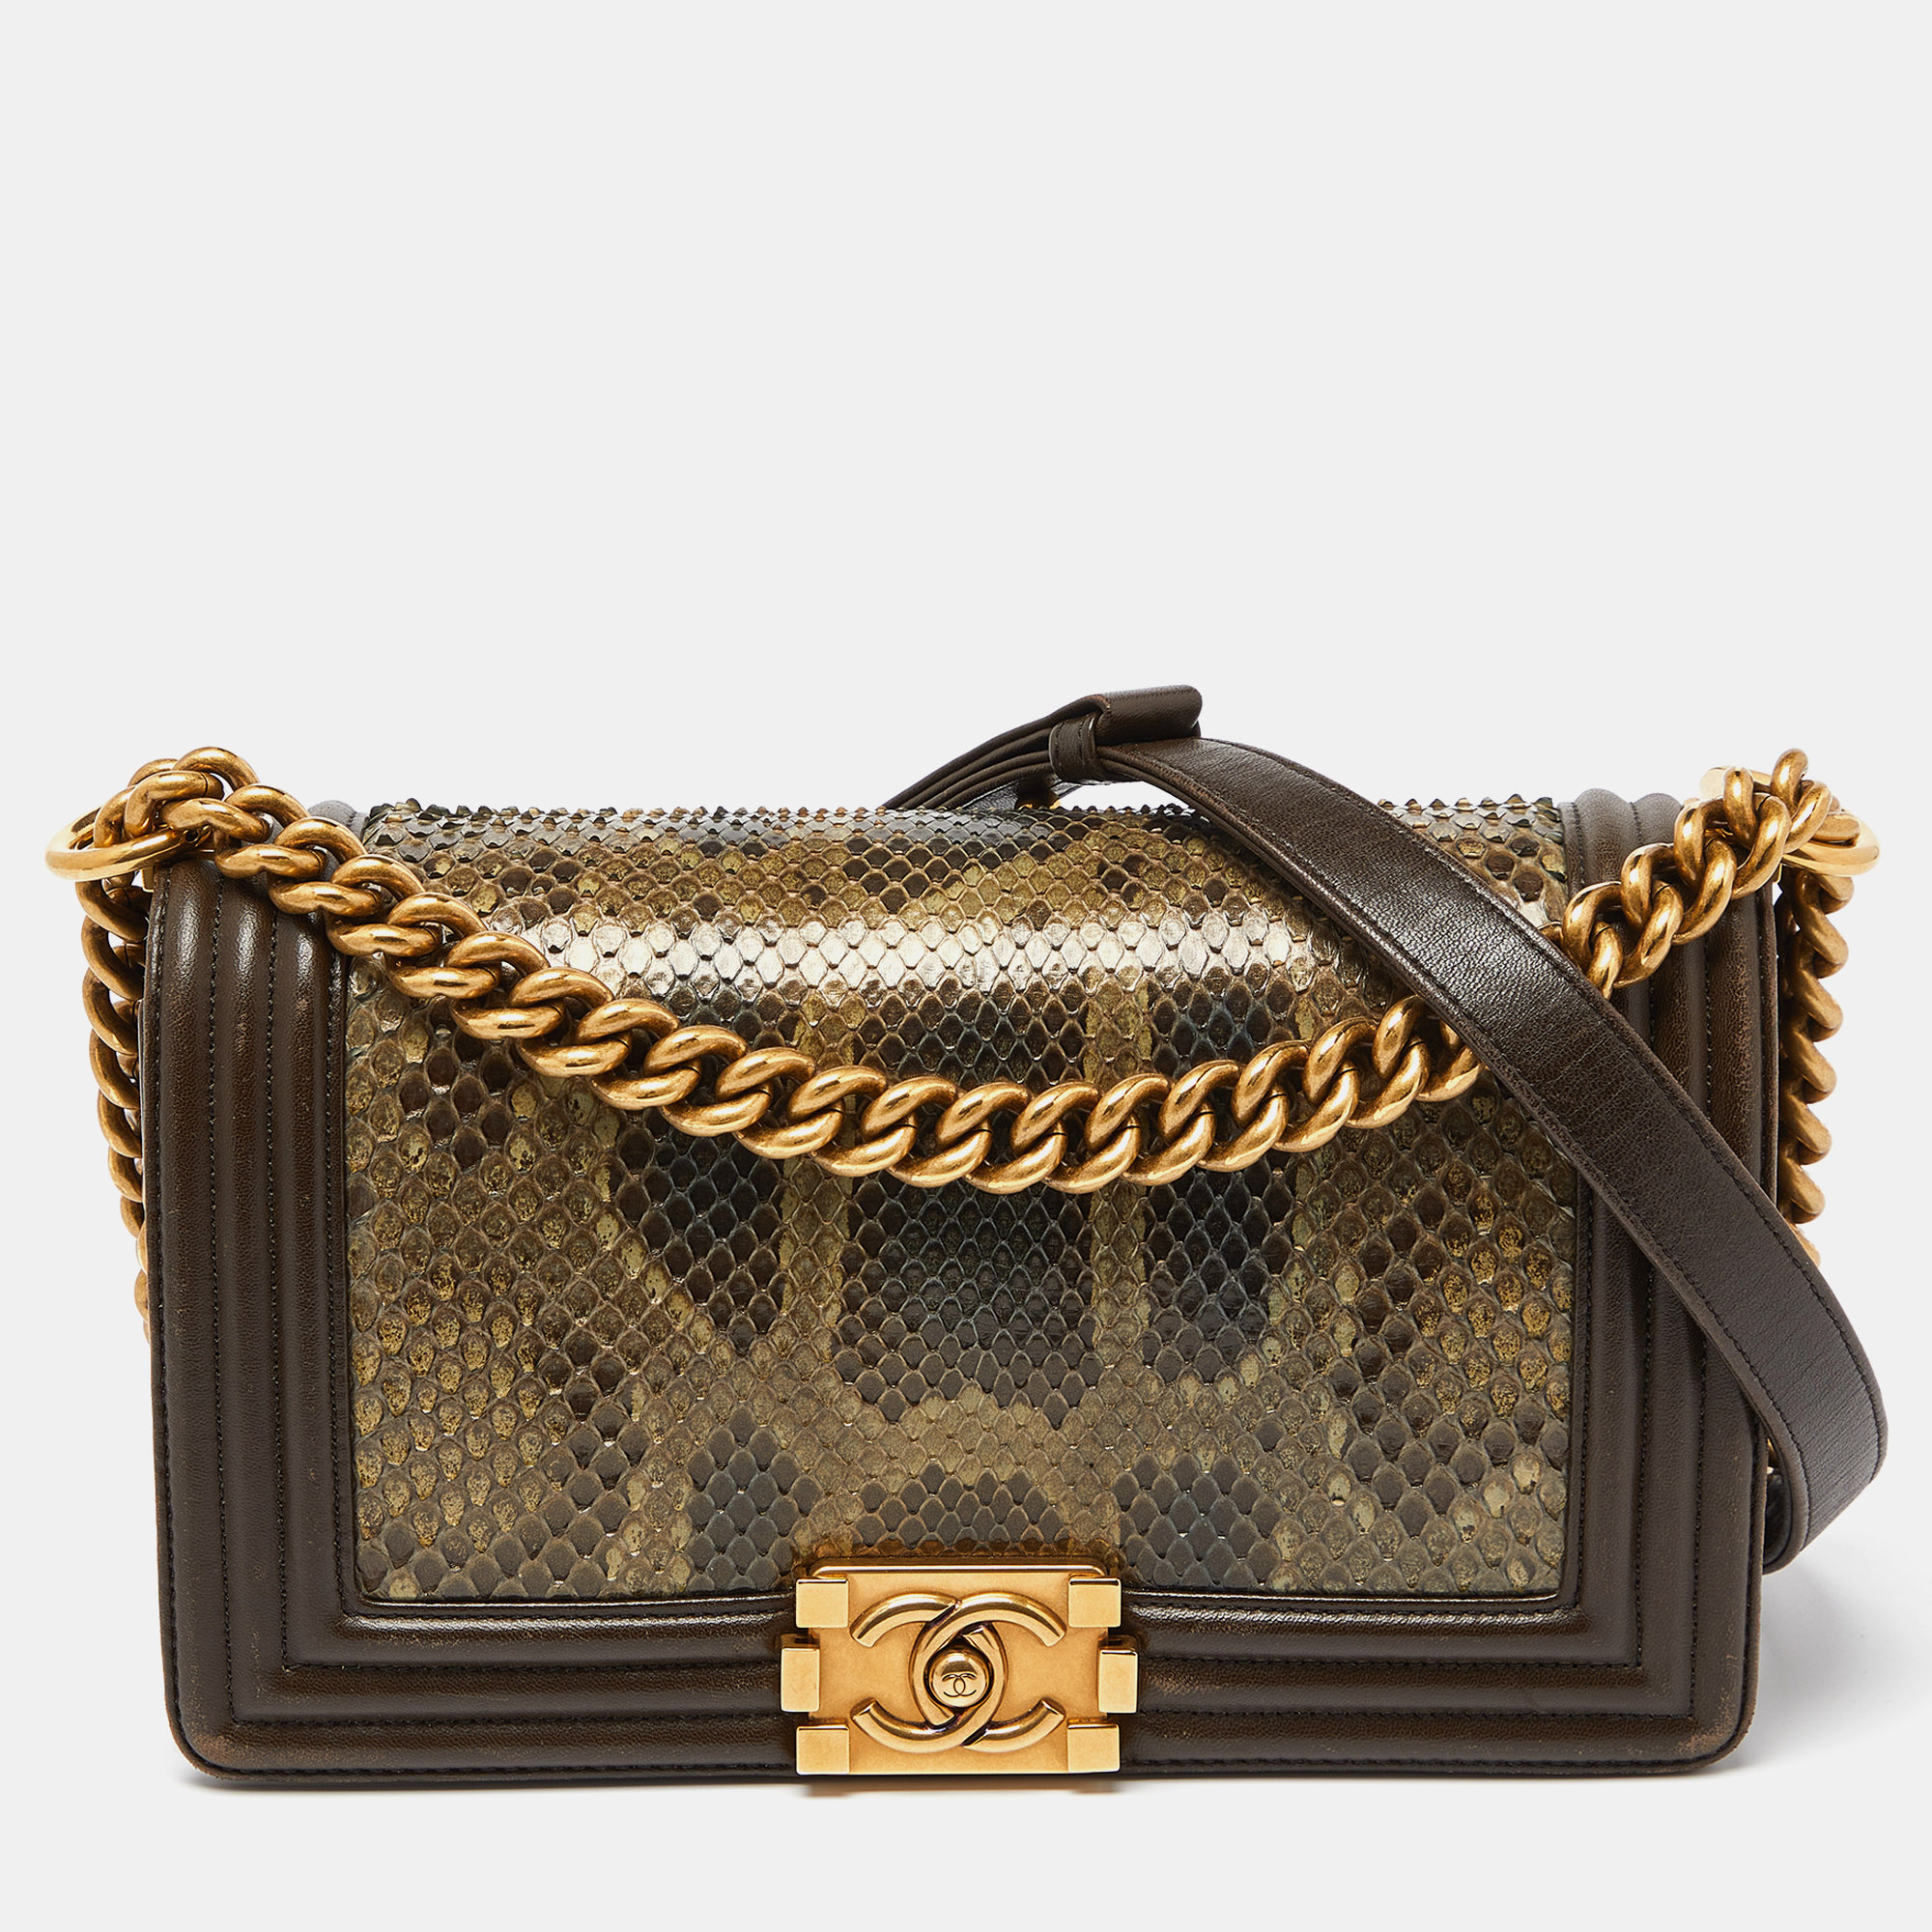 Chanel olive green python and leather medium boy flap bag